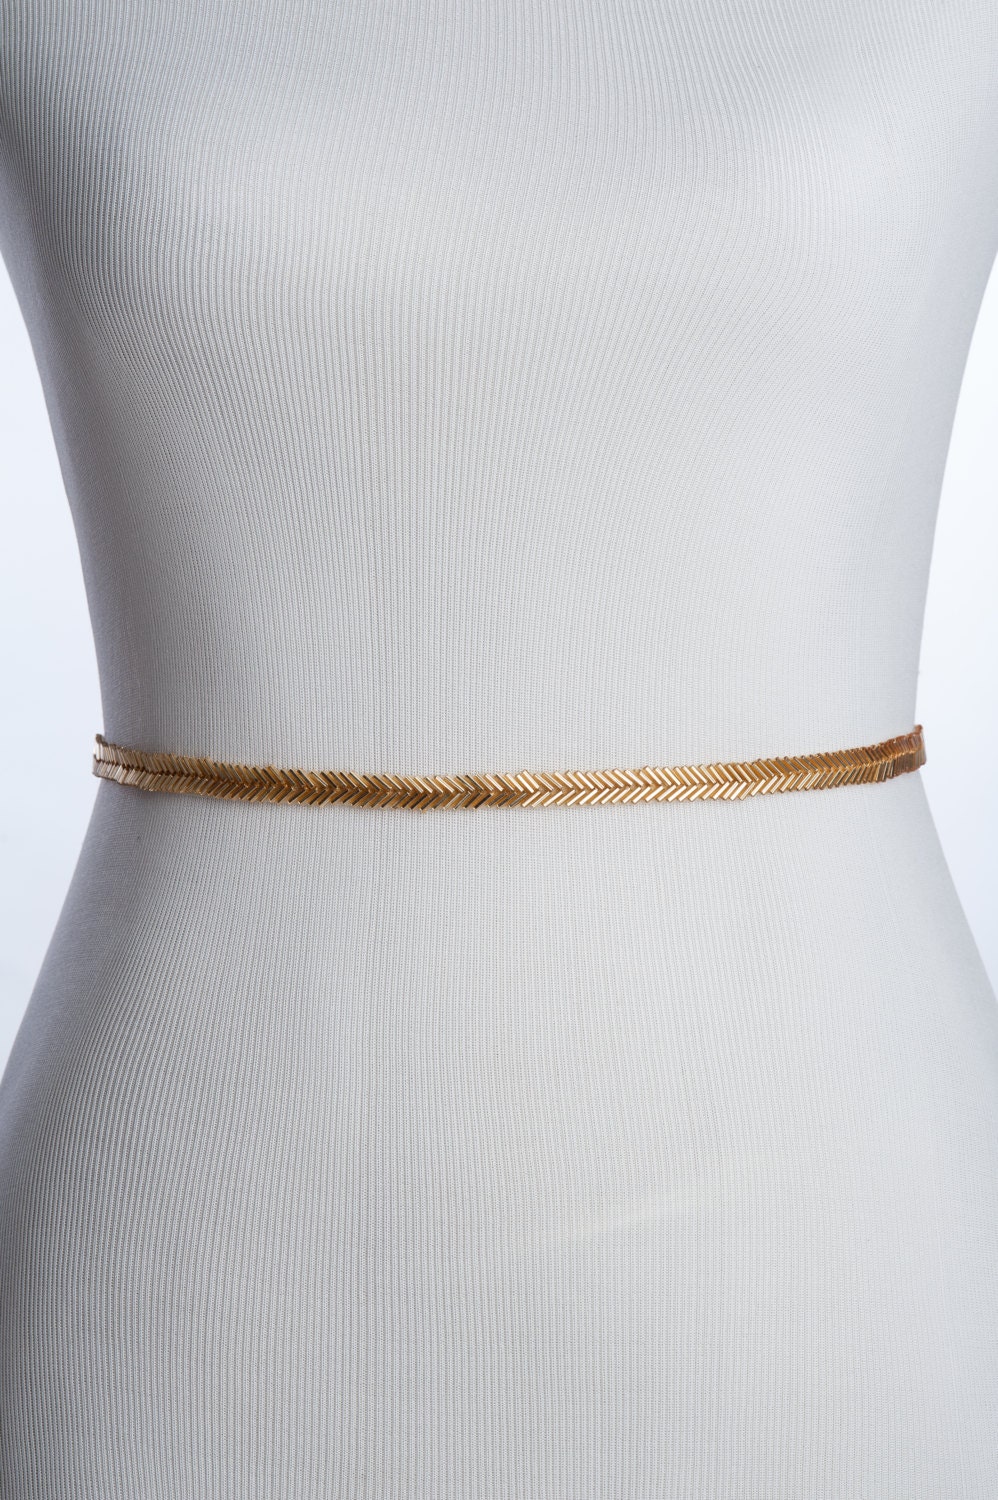 skinny gold bridal belt thin bridal sash belts wedding sash